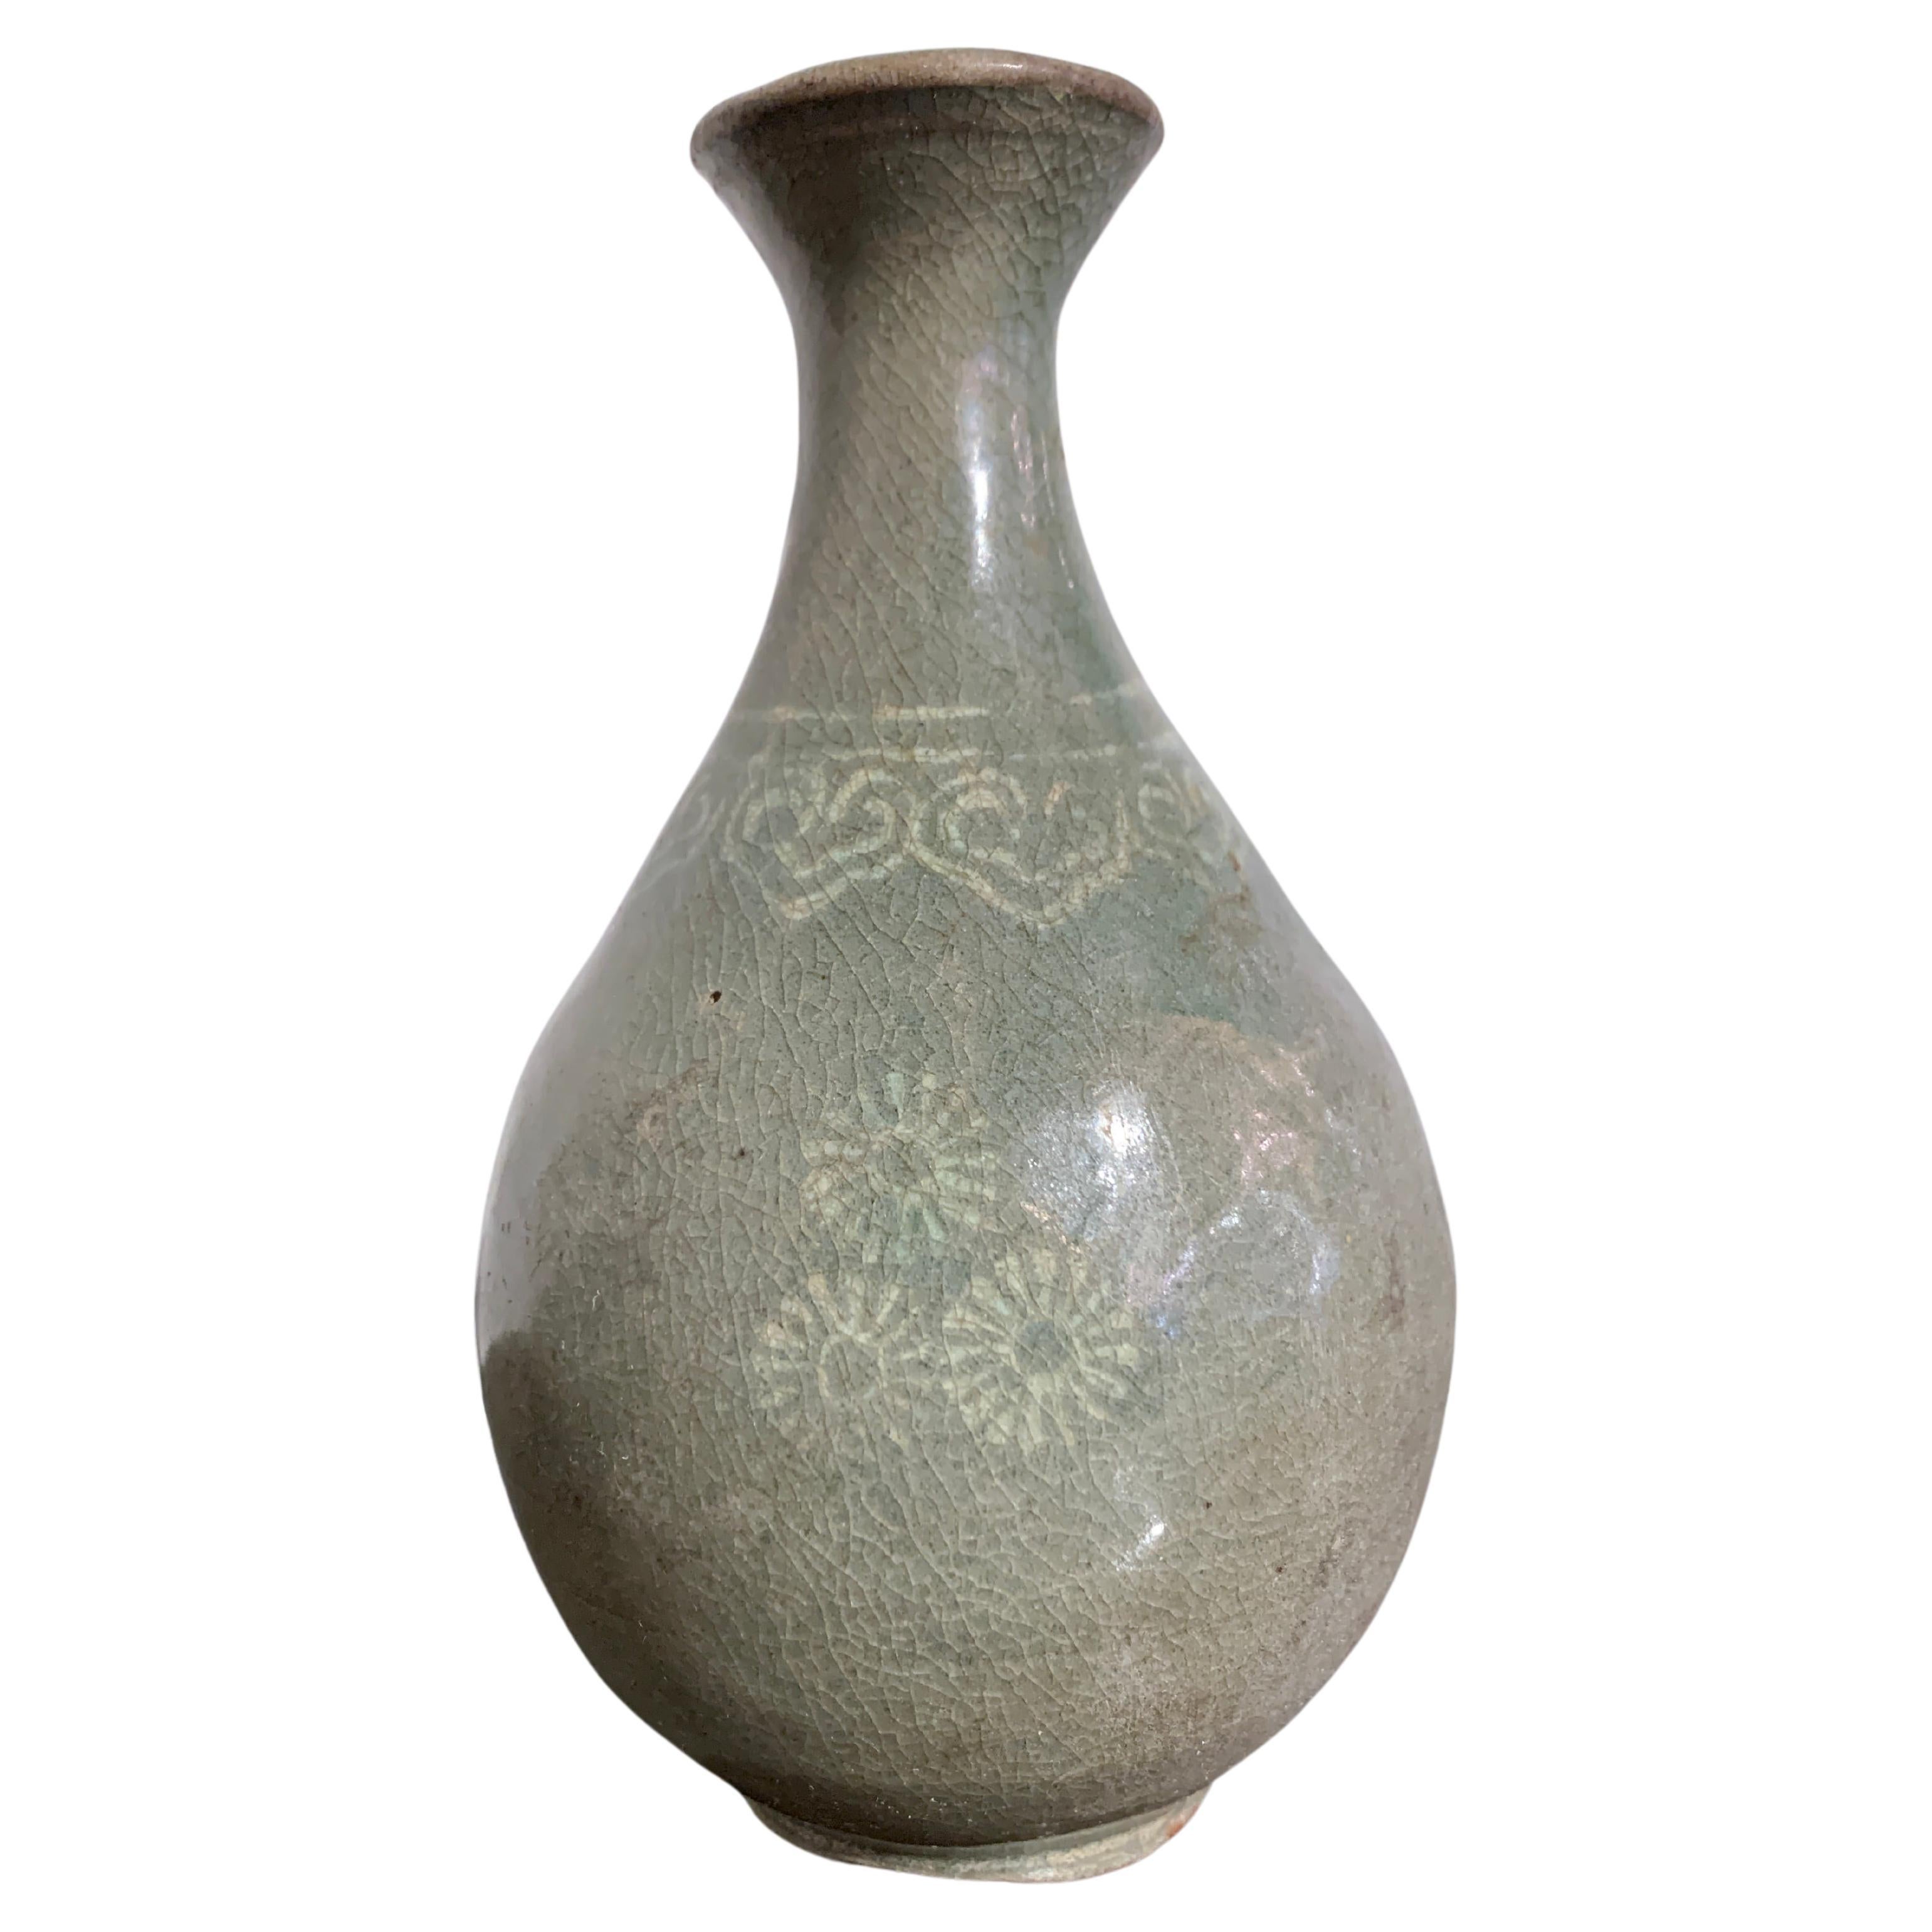 Is Korean celadon pottery valuable?